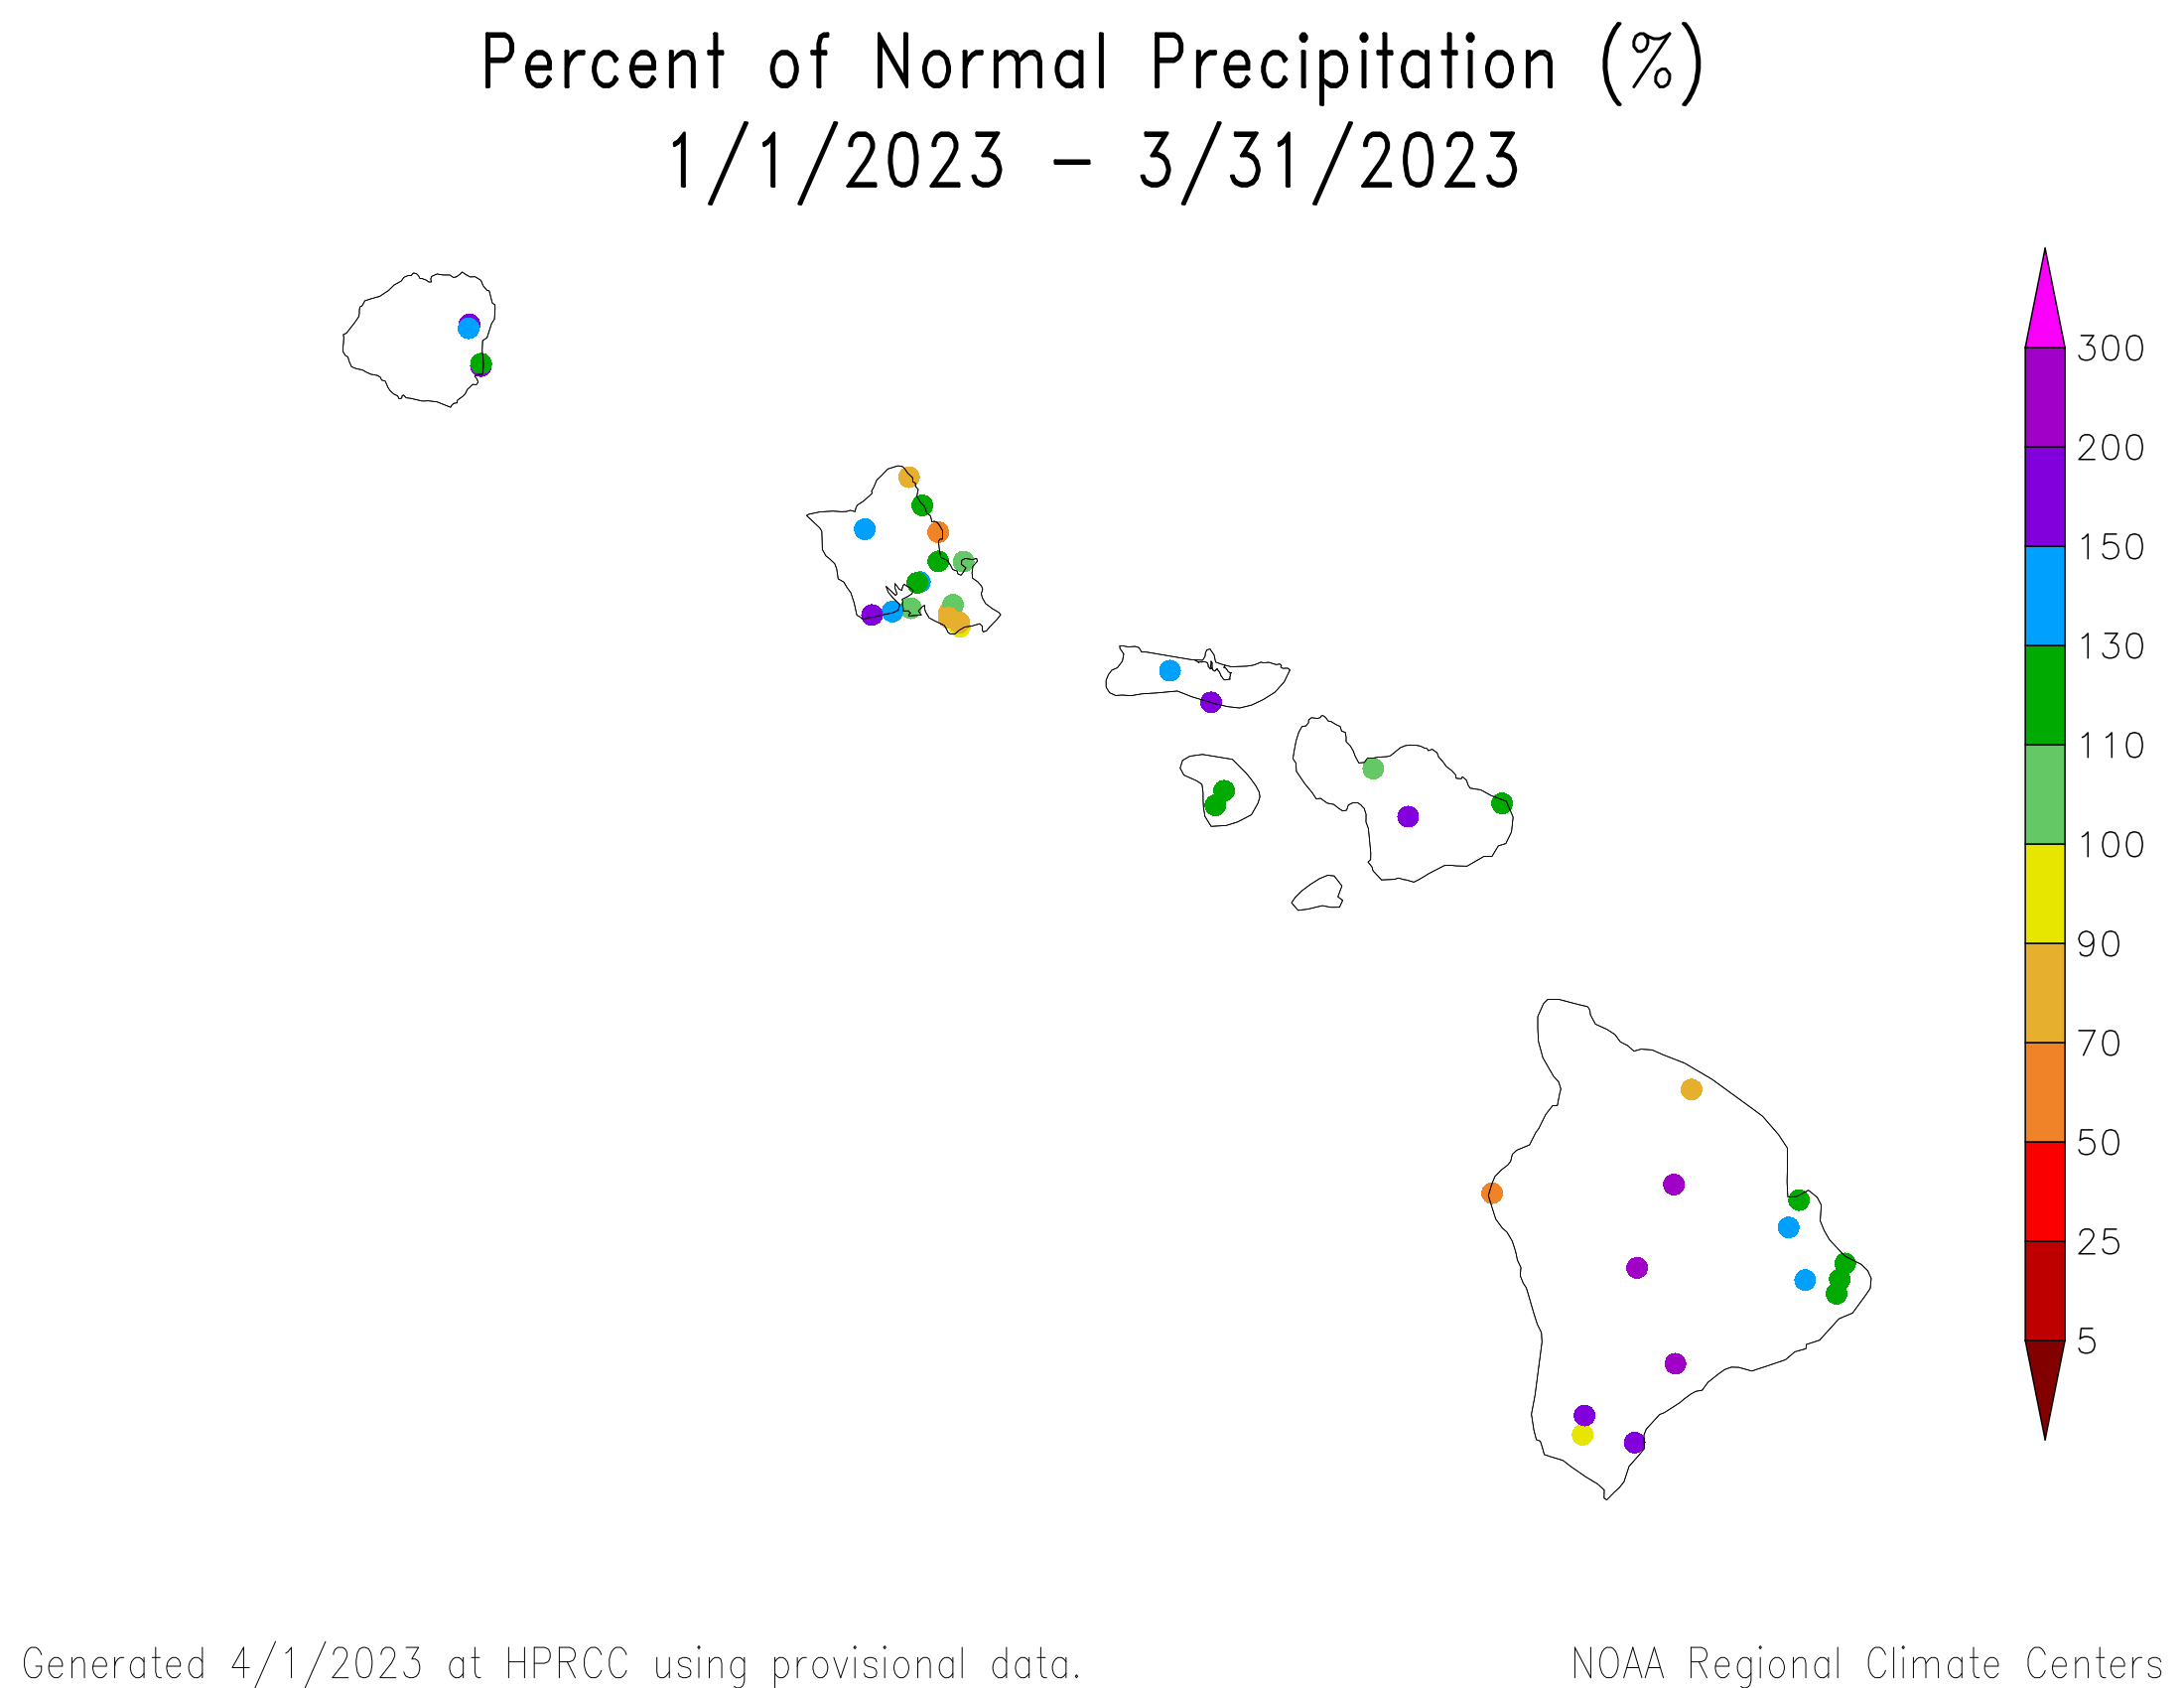 Hawaii Percent of Normal Precipitation, January-March 2023